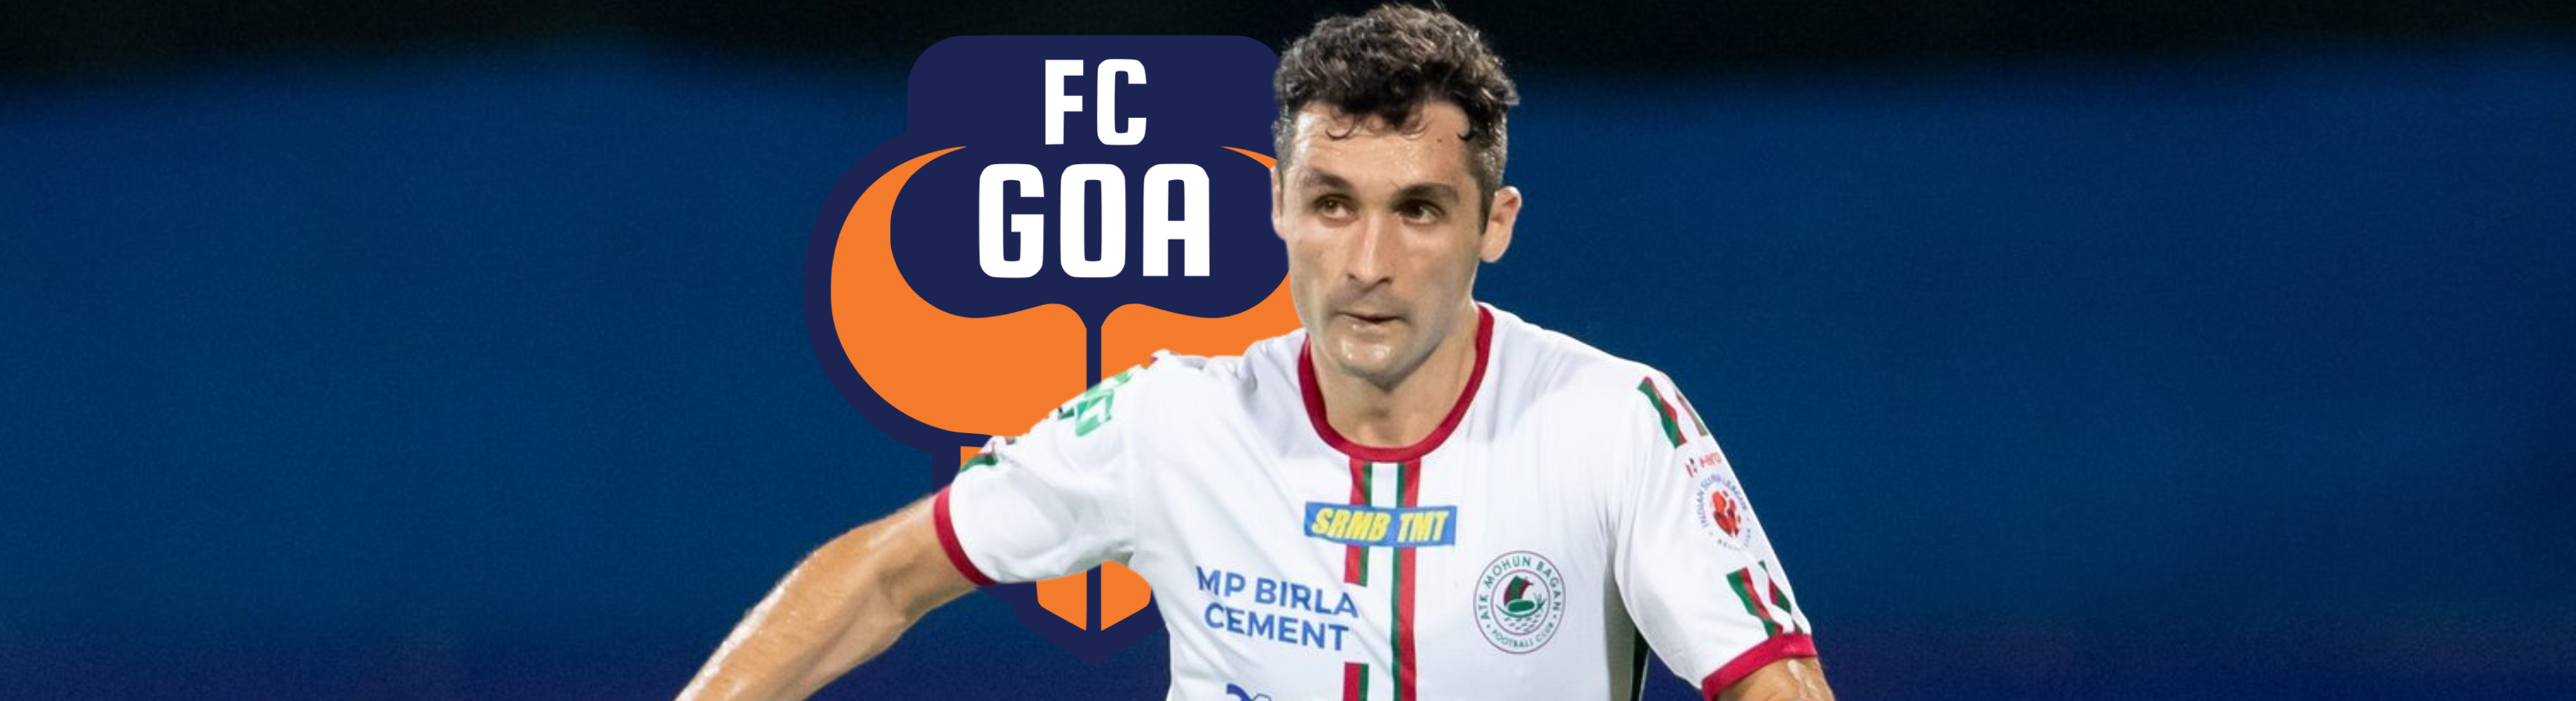 McHugh’s Transfer Saga: Bagan to FC Goa